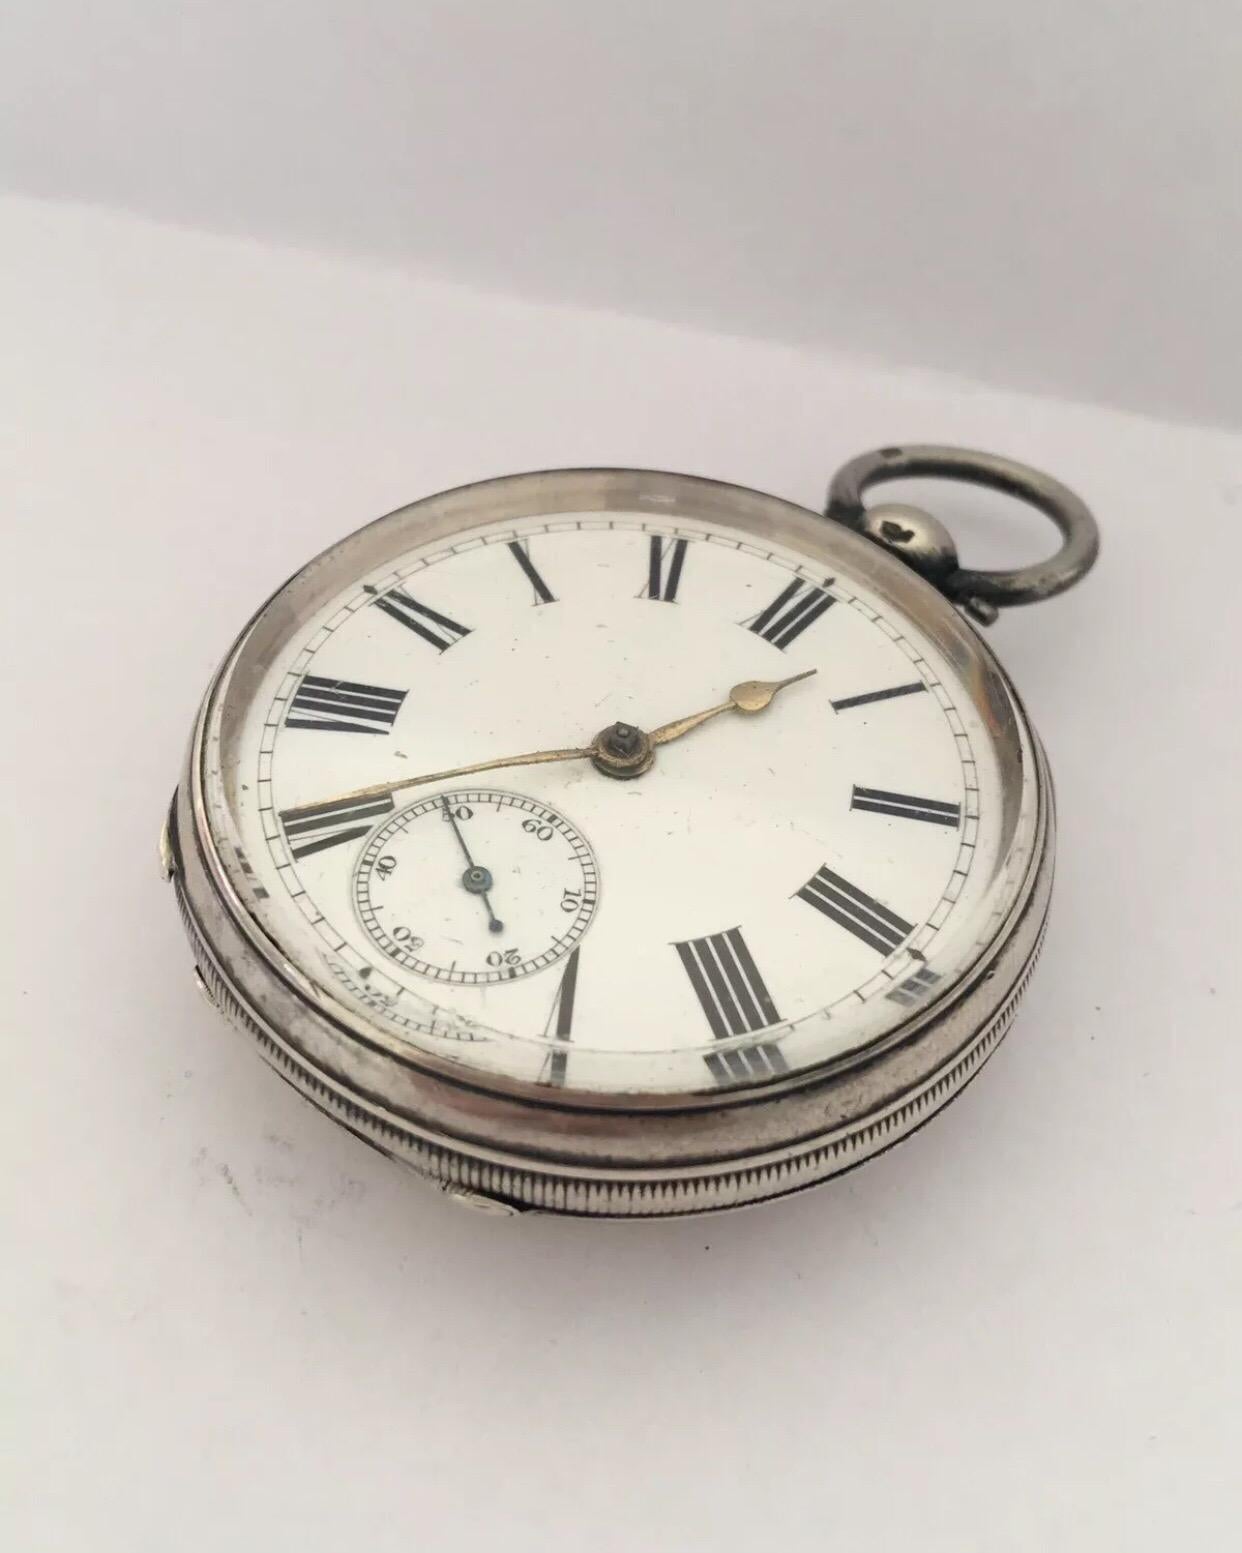 Early American Watch Co. Waltham Mass Silver Pocket Watch 5